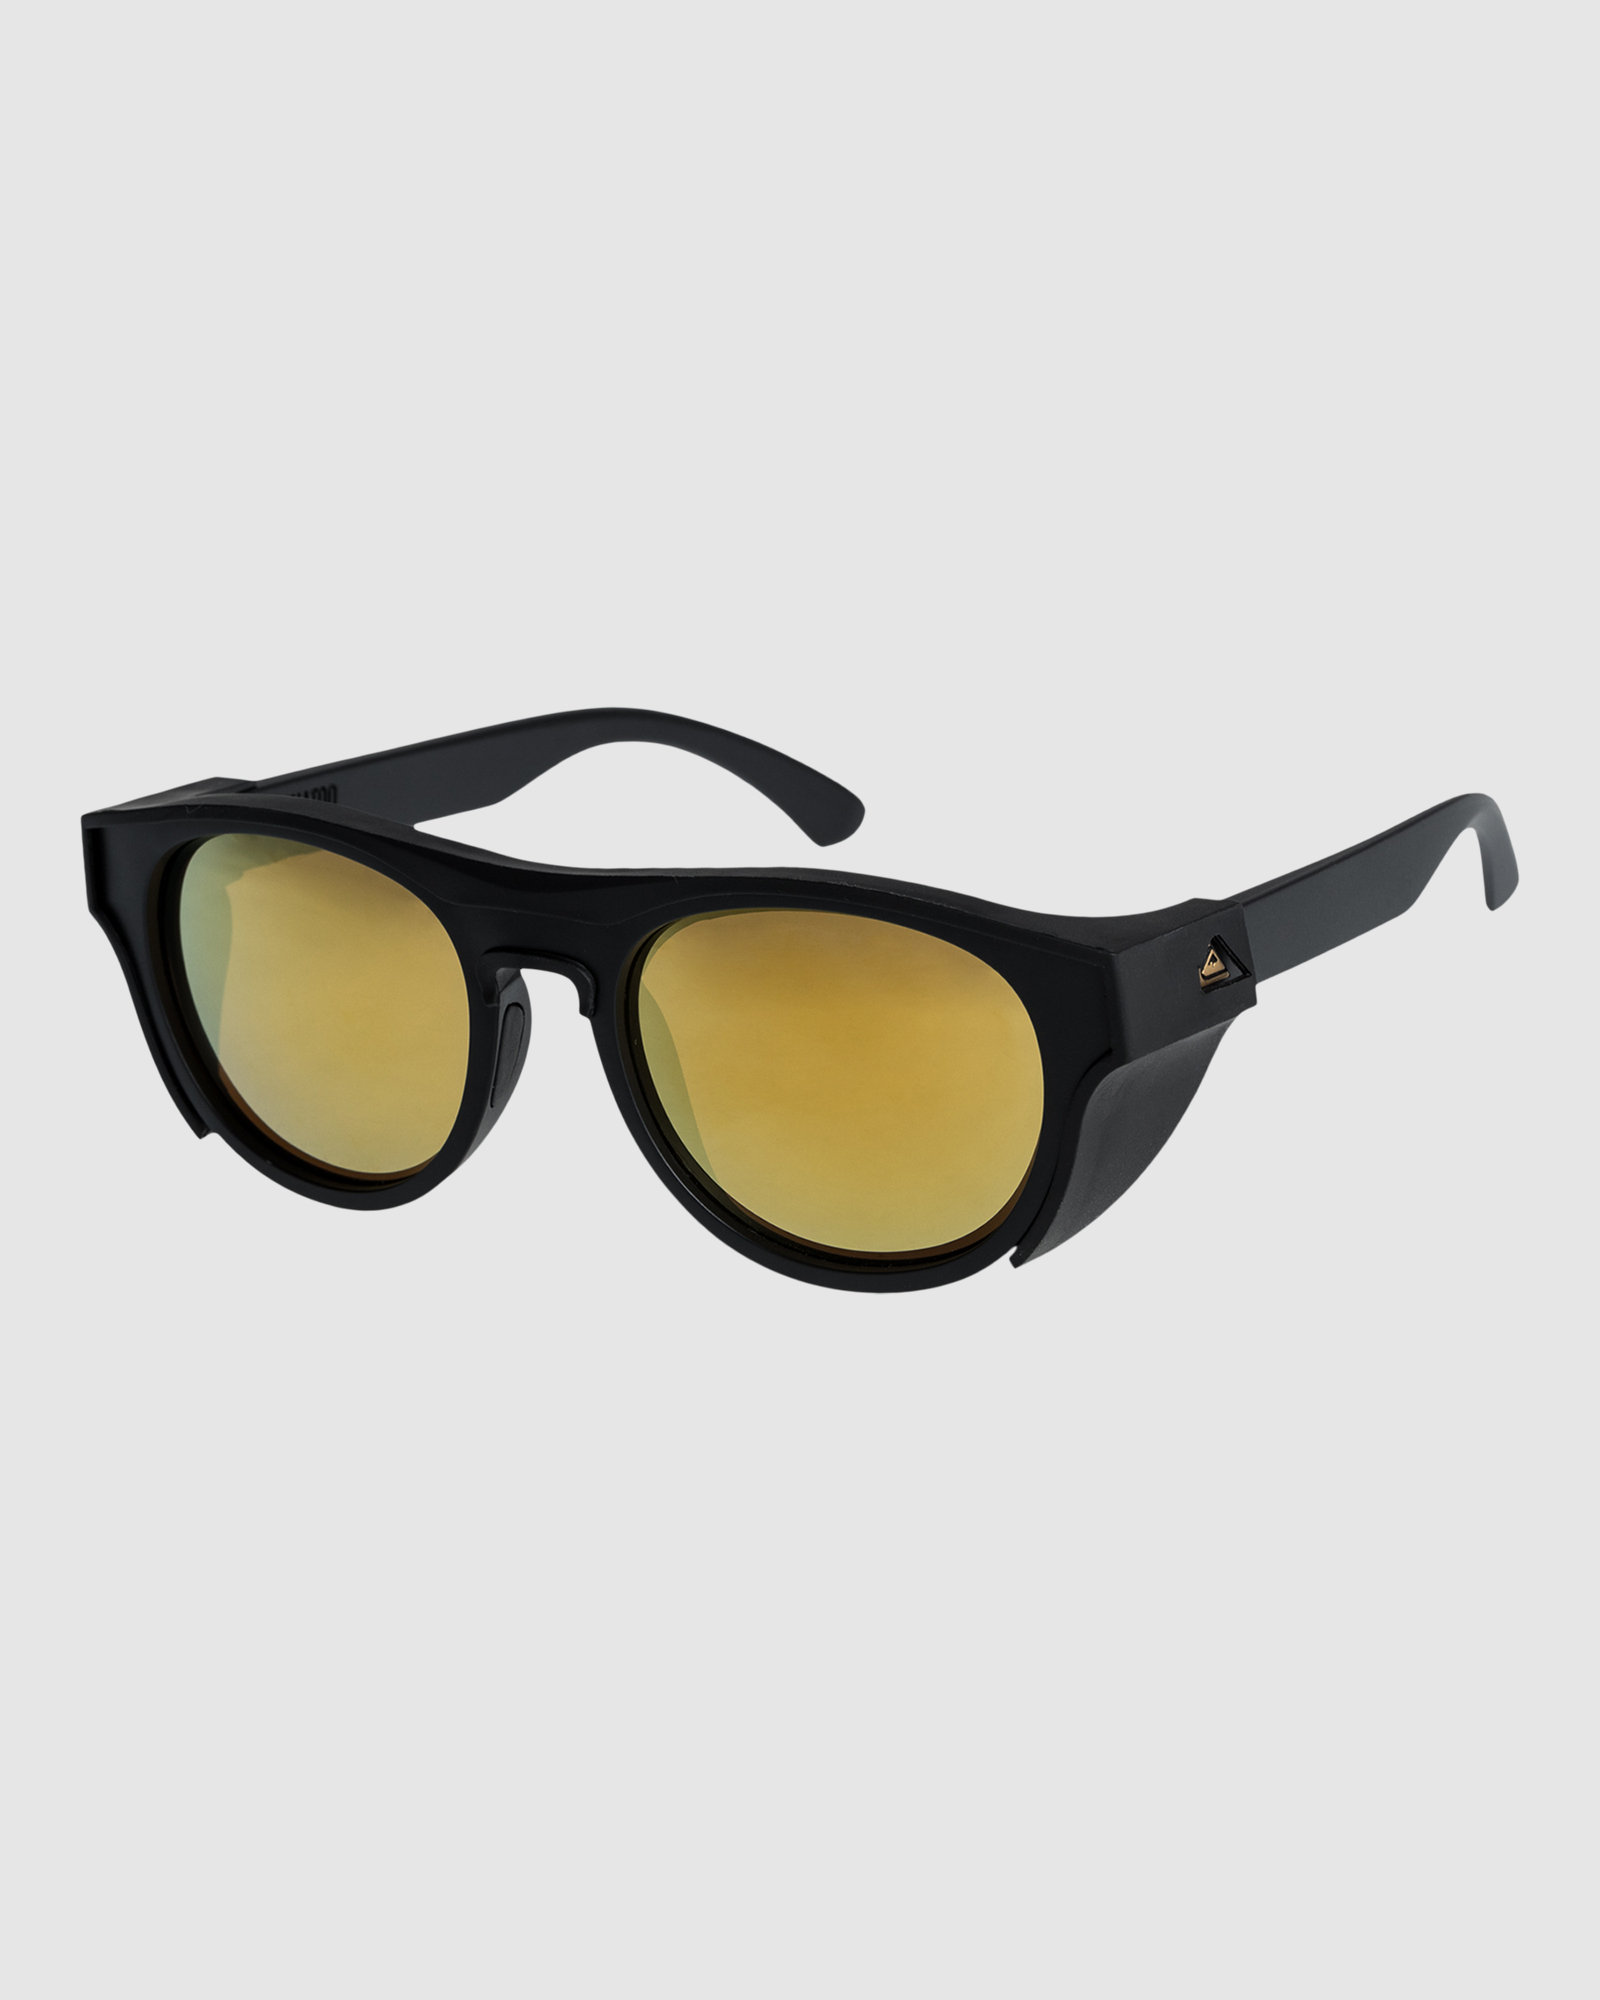 Quiksilver Eliminator+ - Sunglasses For Men - Black Flash Gold | SurfStitch